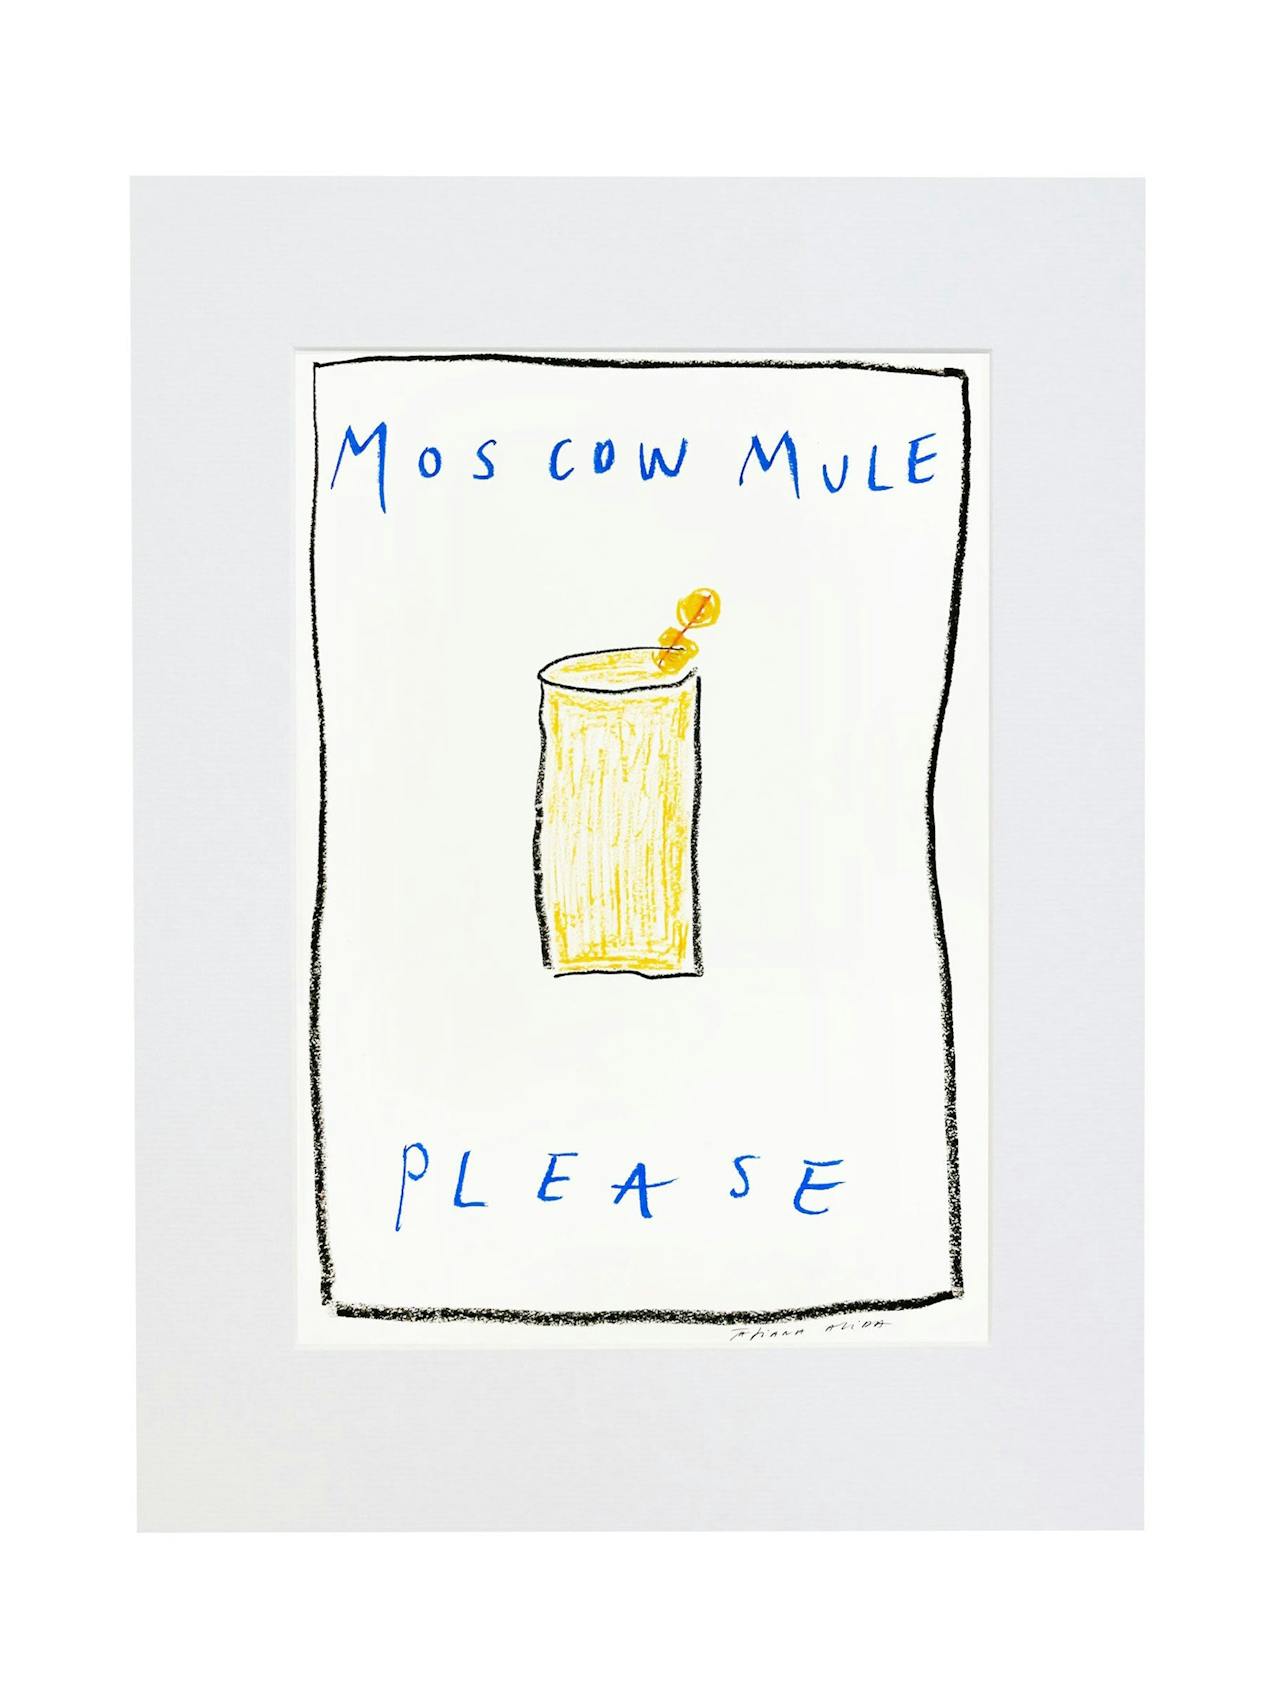 Moscow Mule Please print in oil pastel